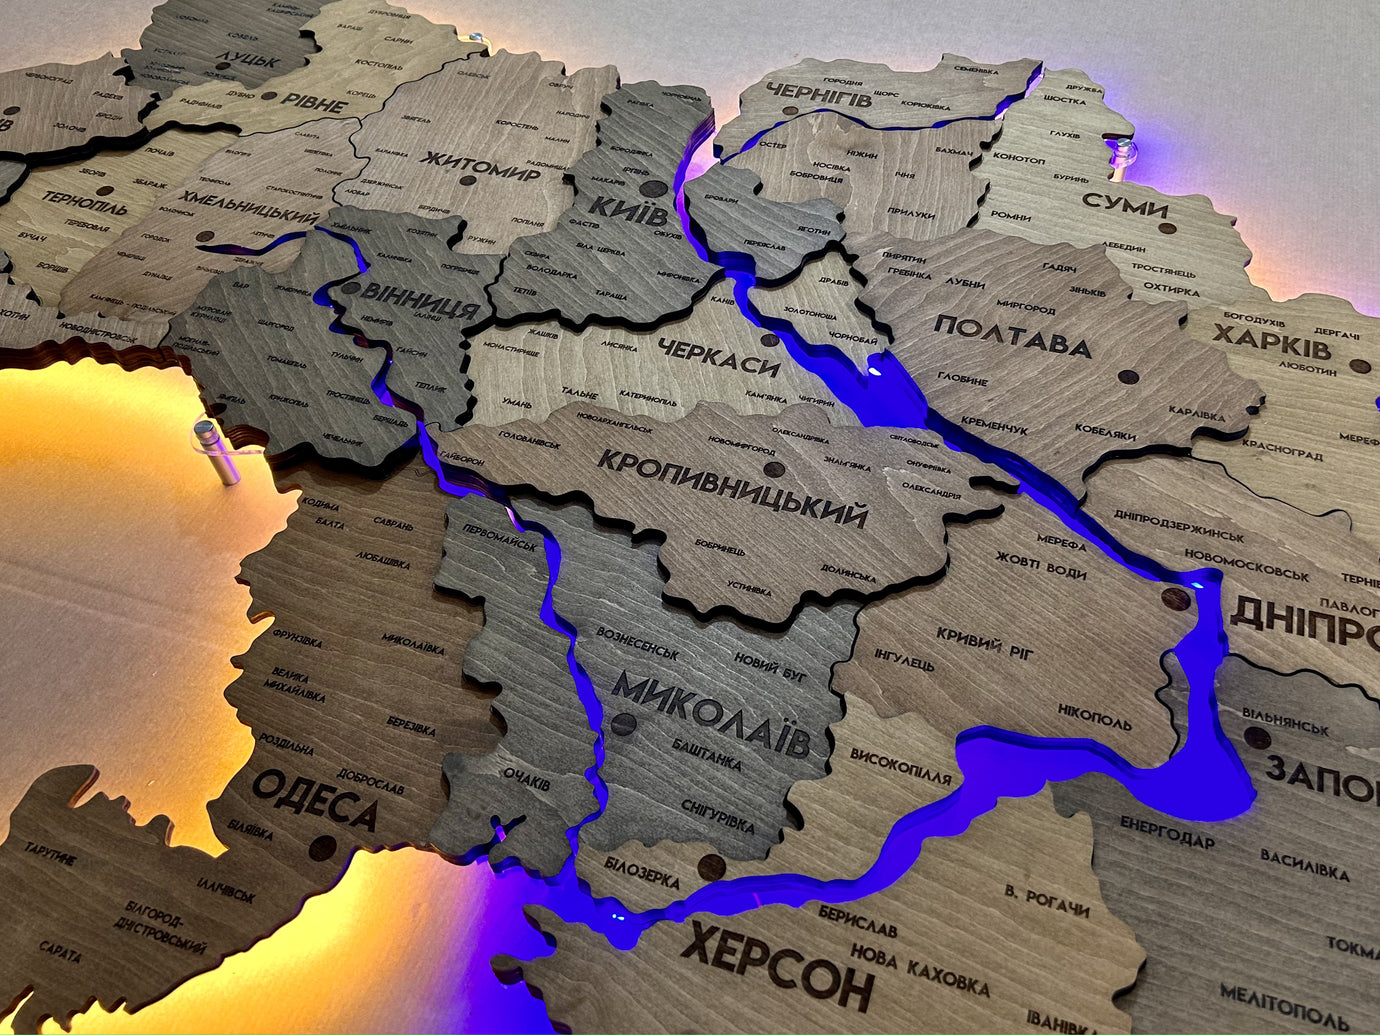 Multilayer Ukraine LED map with backlighting of rivers color Helsinki